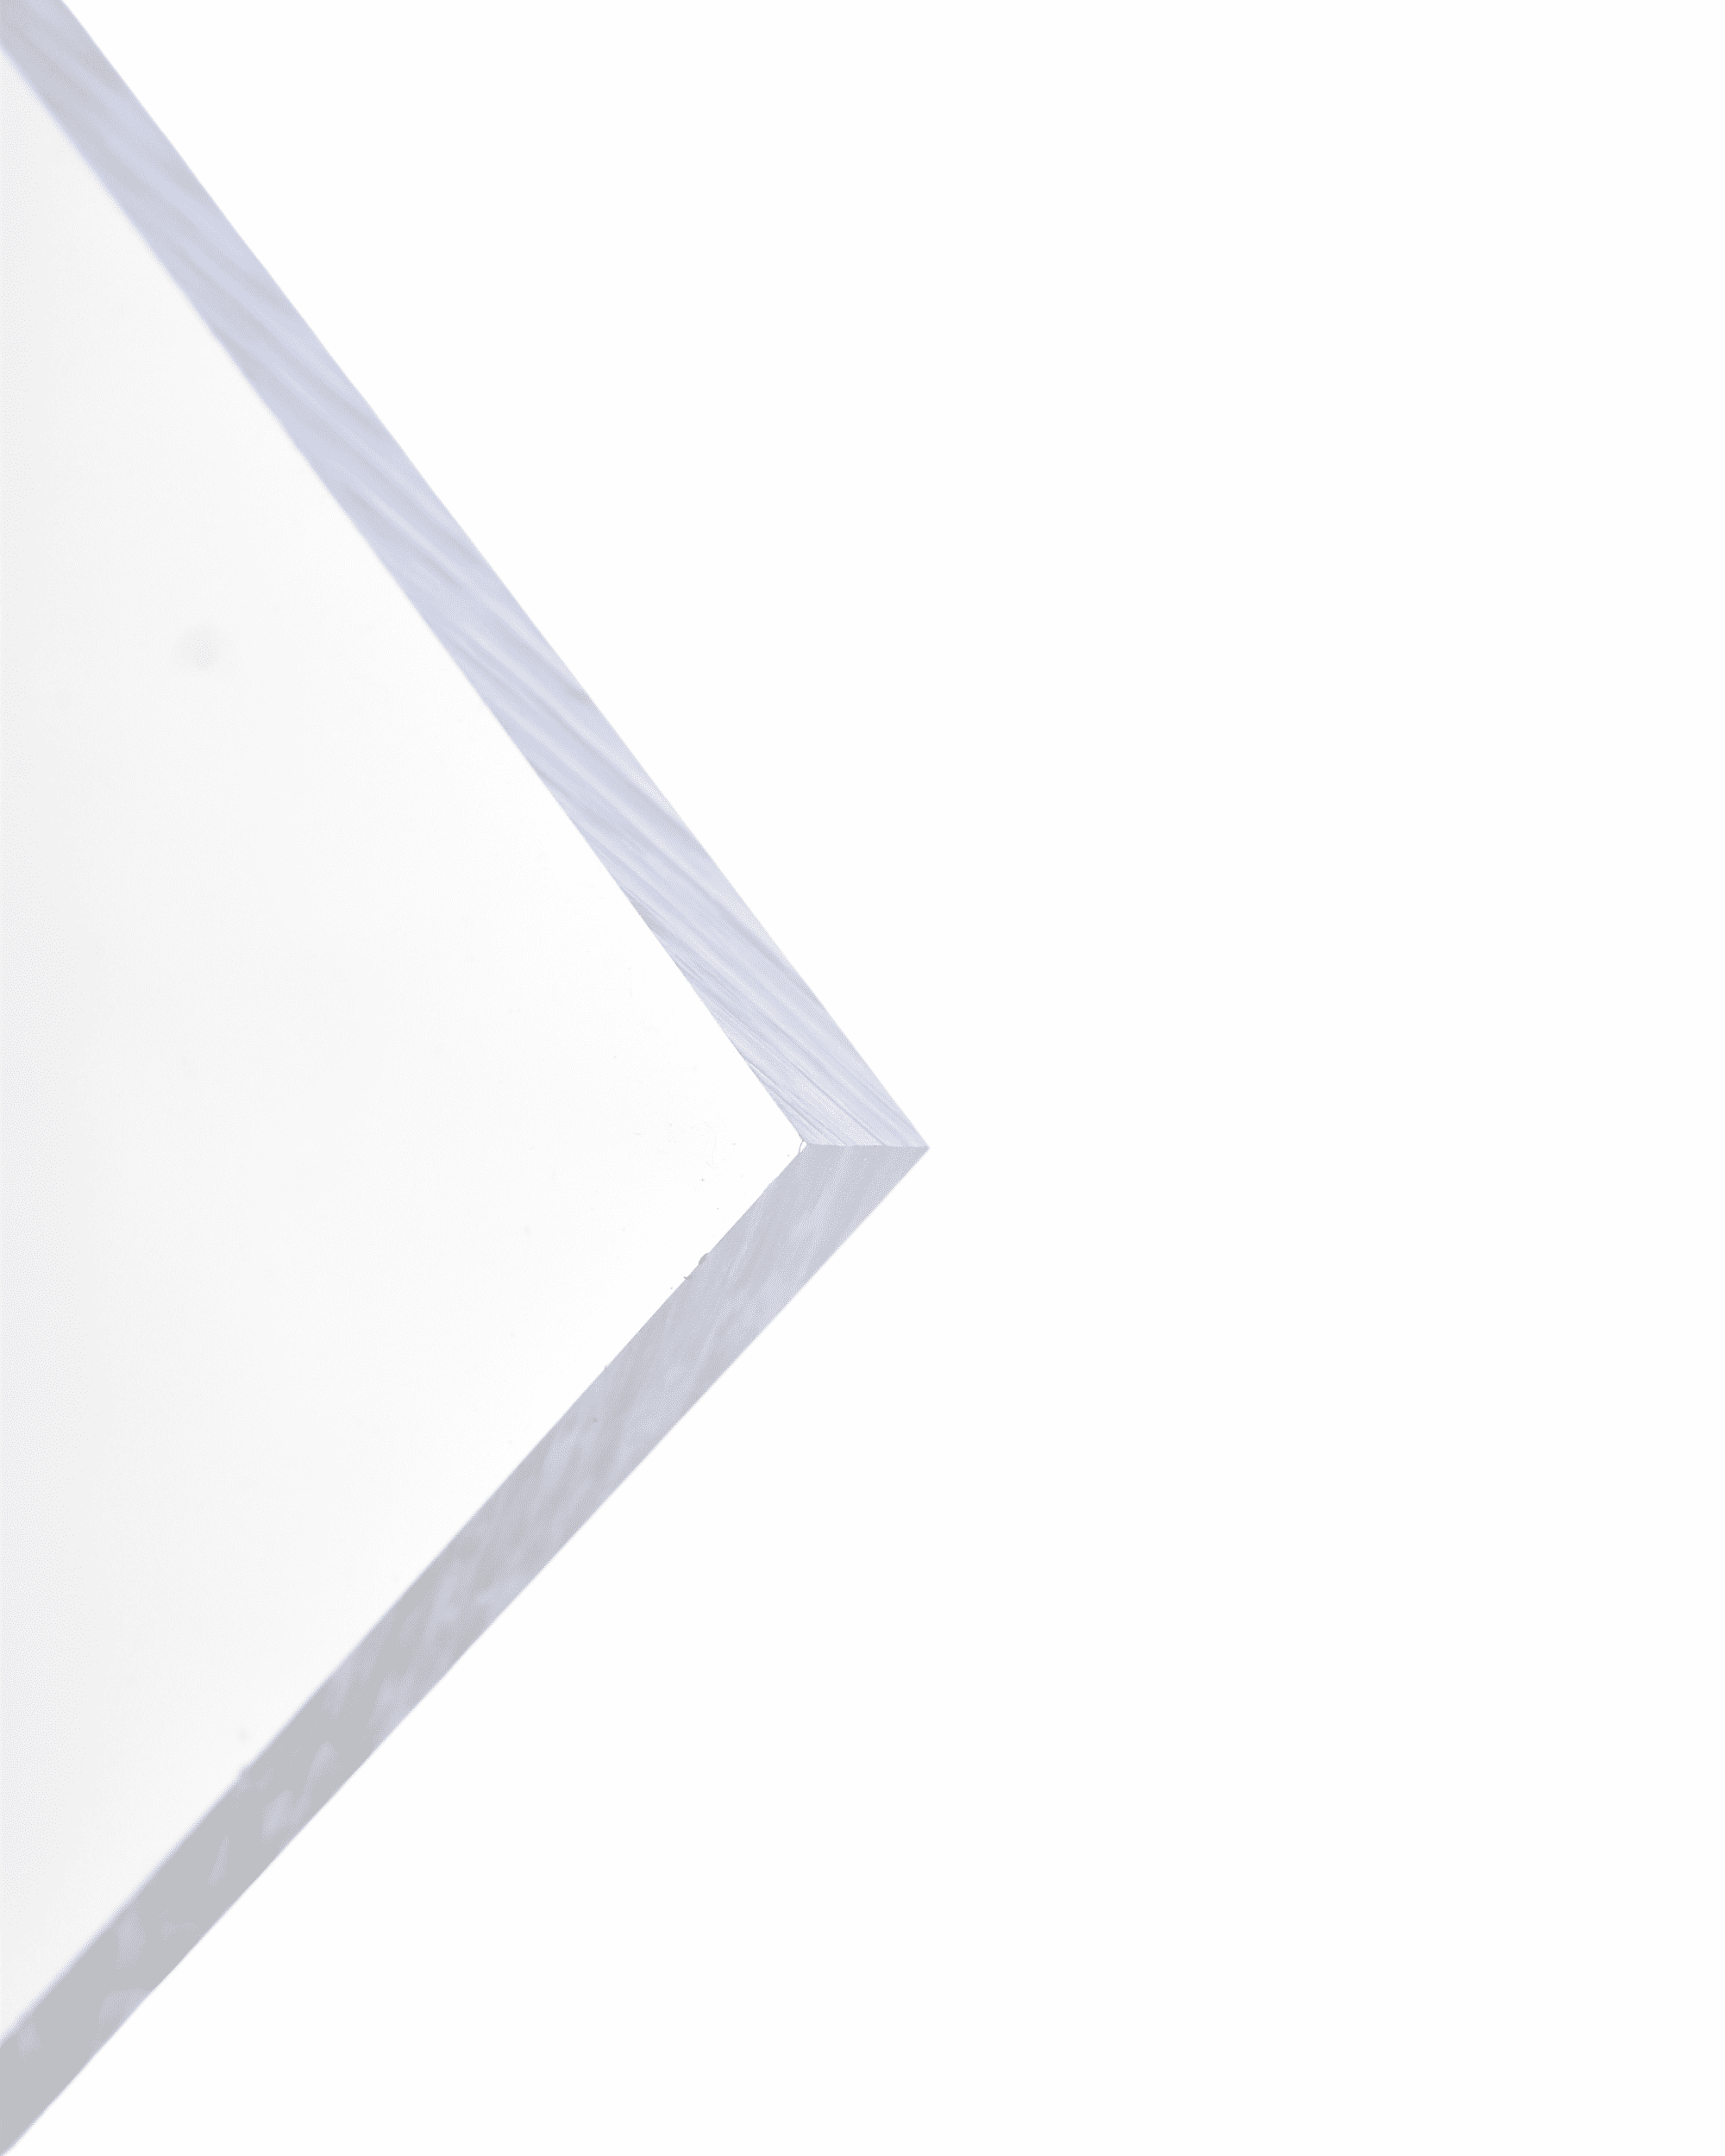 Acrylic Sheet 1/2" Clear Plexiglass 36" x 24" 